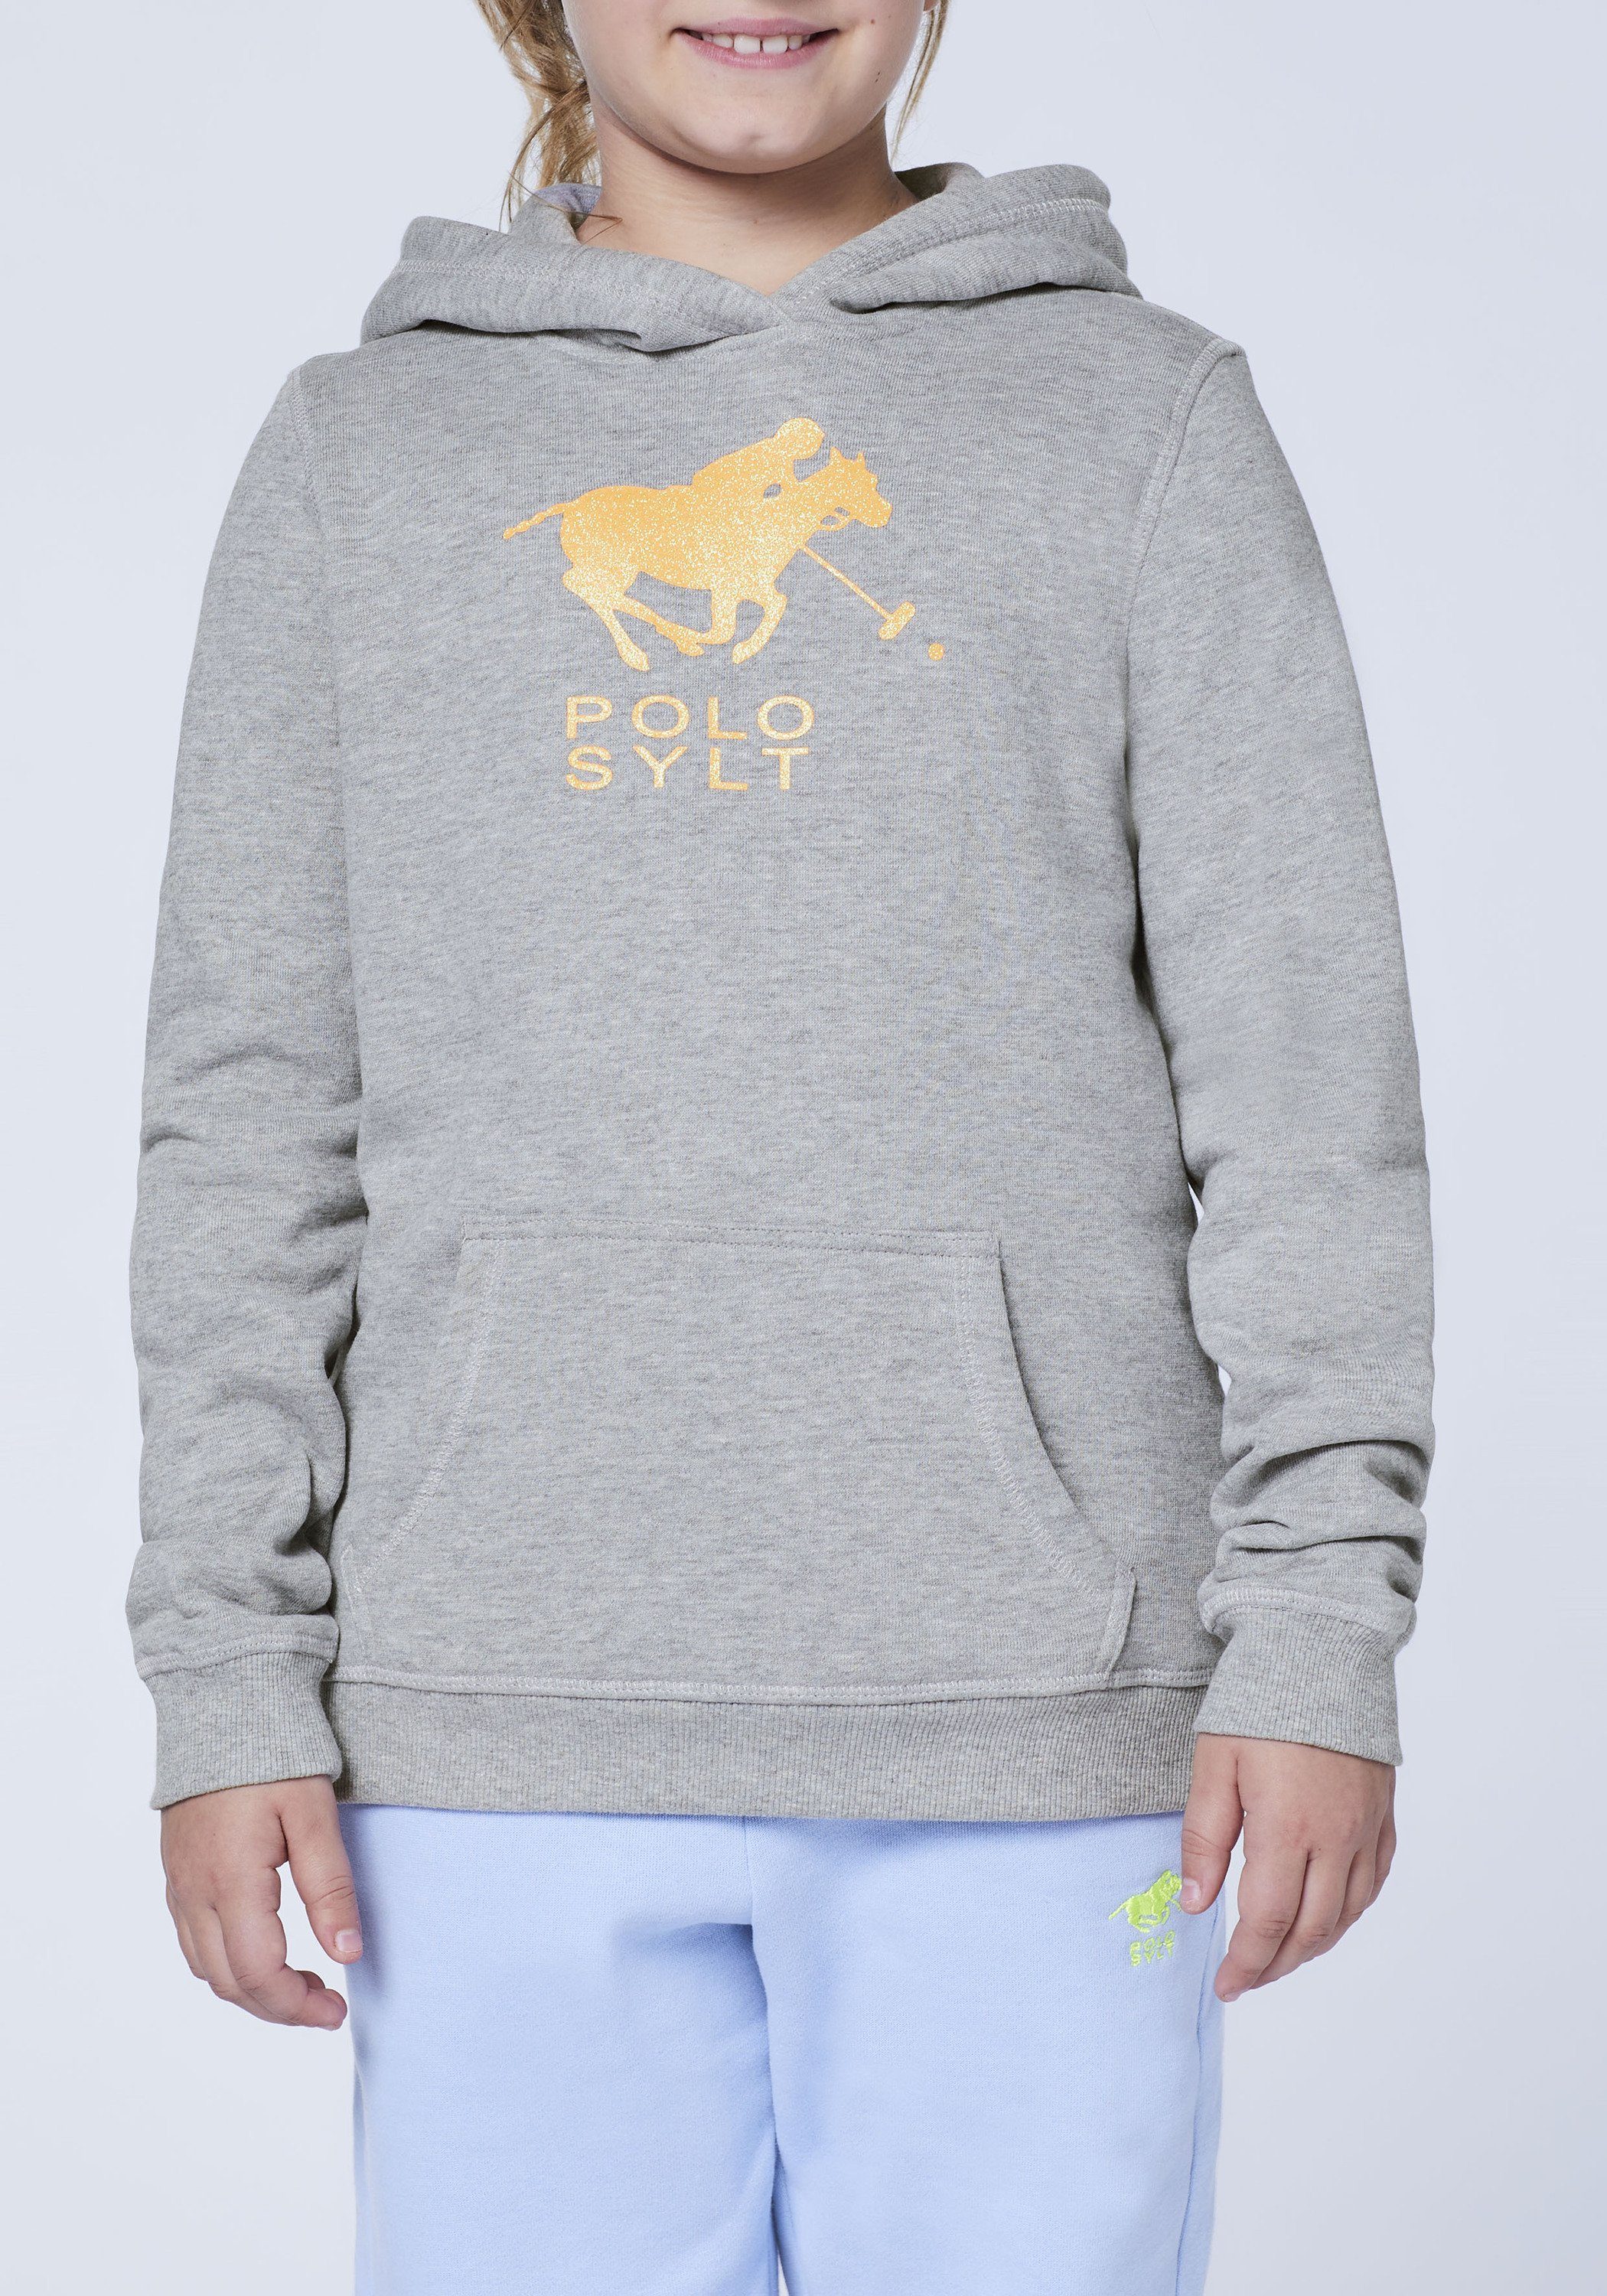 Polo Sylt Sweatshirt mit Label-Motiv Neutr. Gray glitzerndem